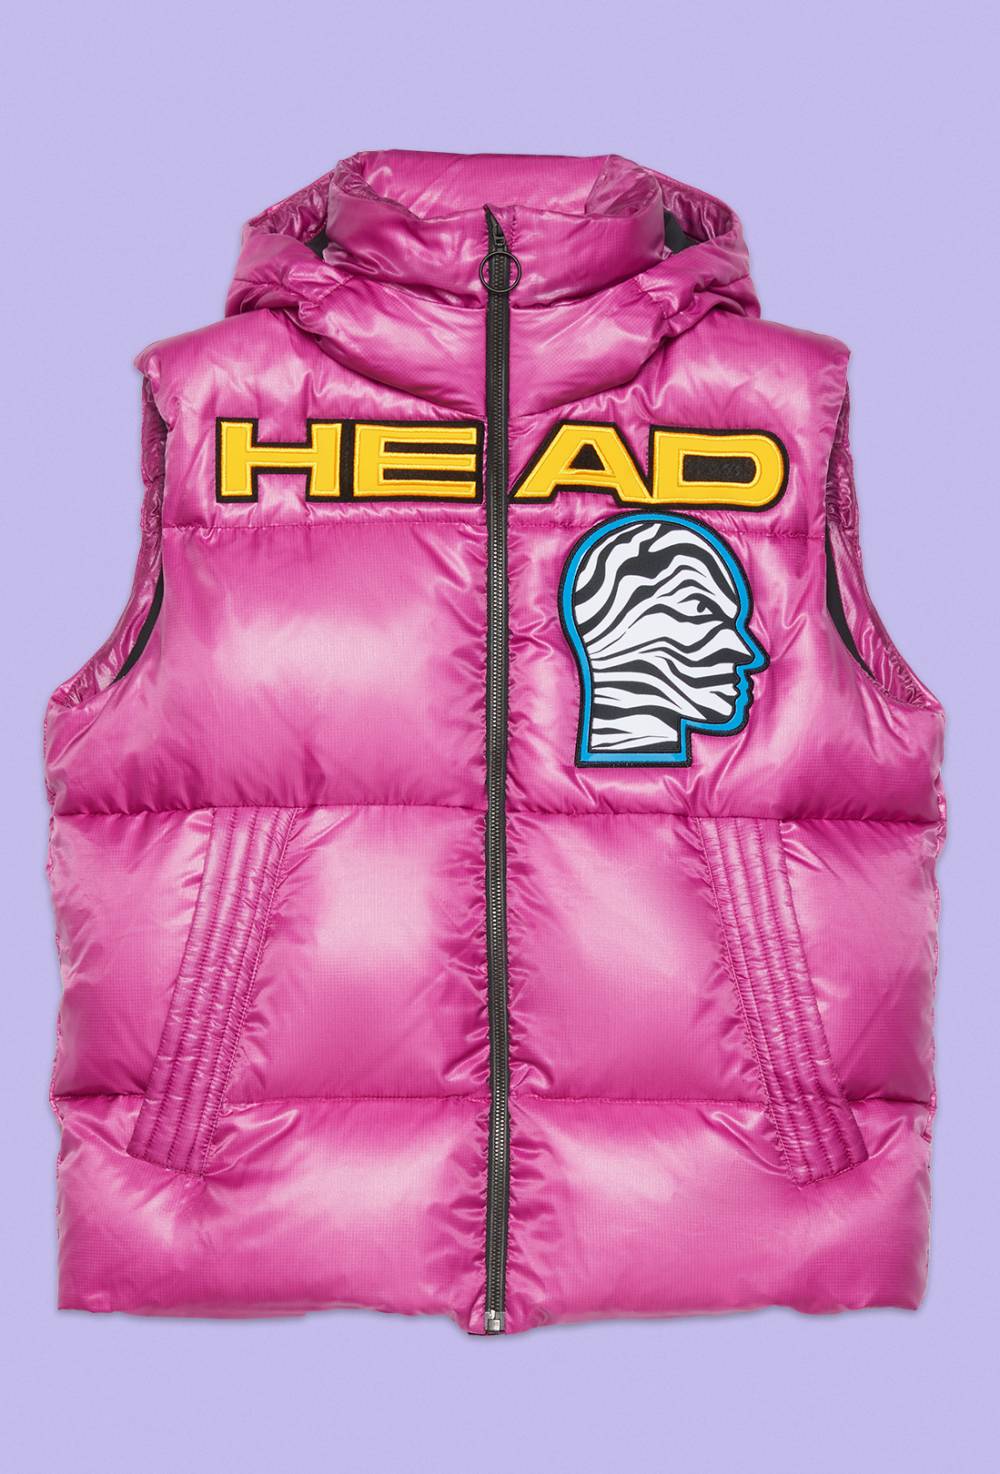 GUCCI TIFFANY jacket by HEAD image #1